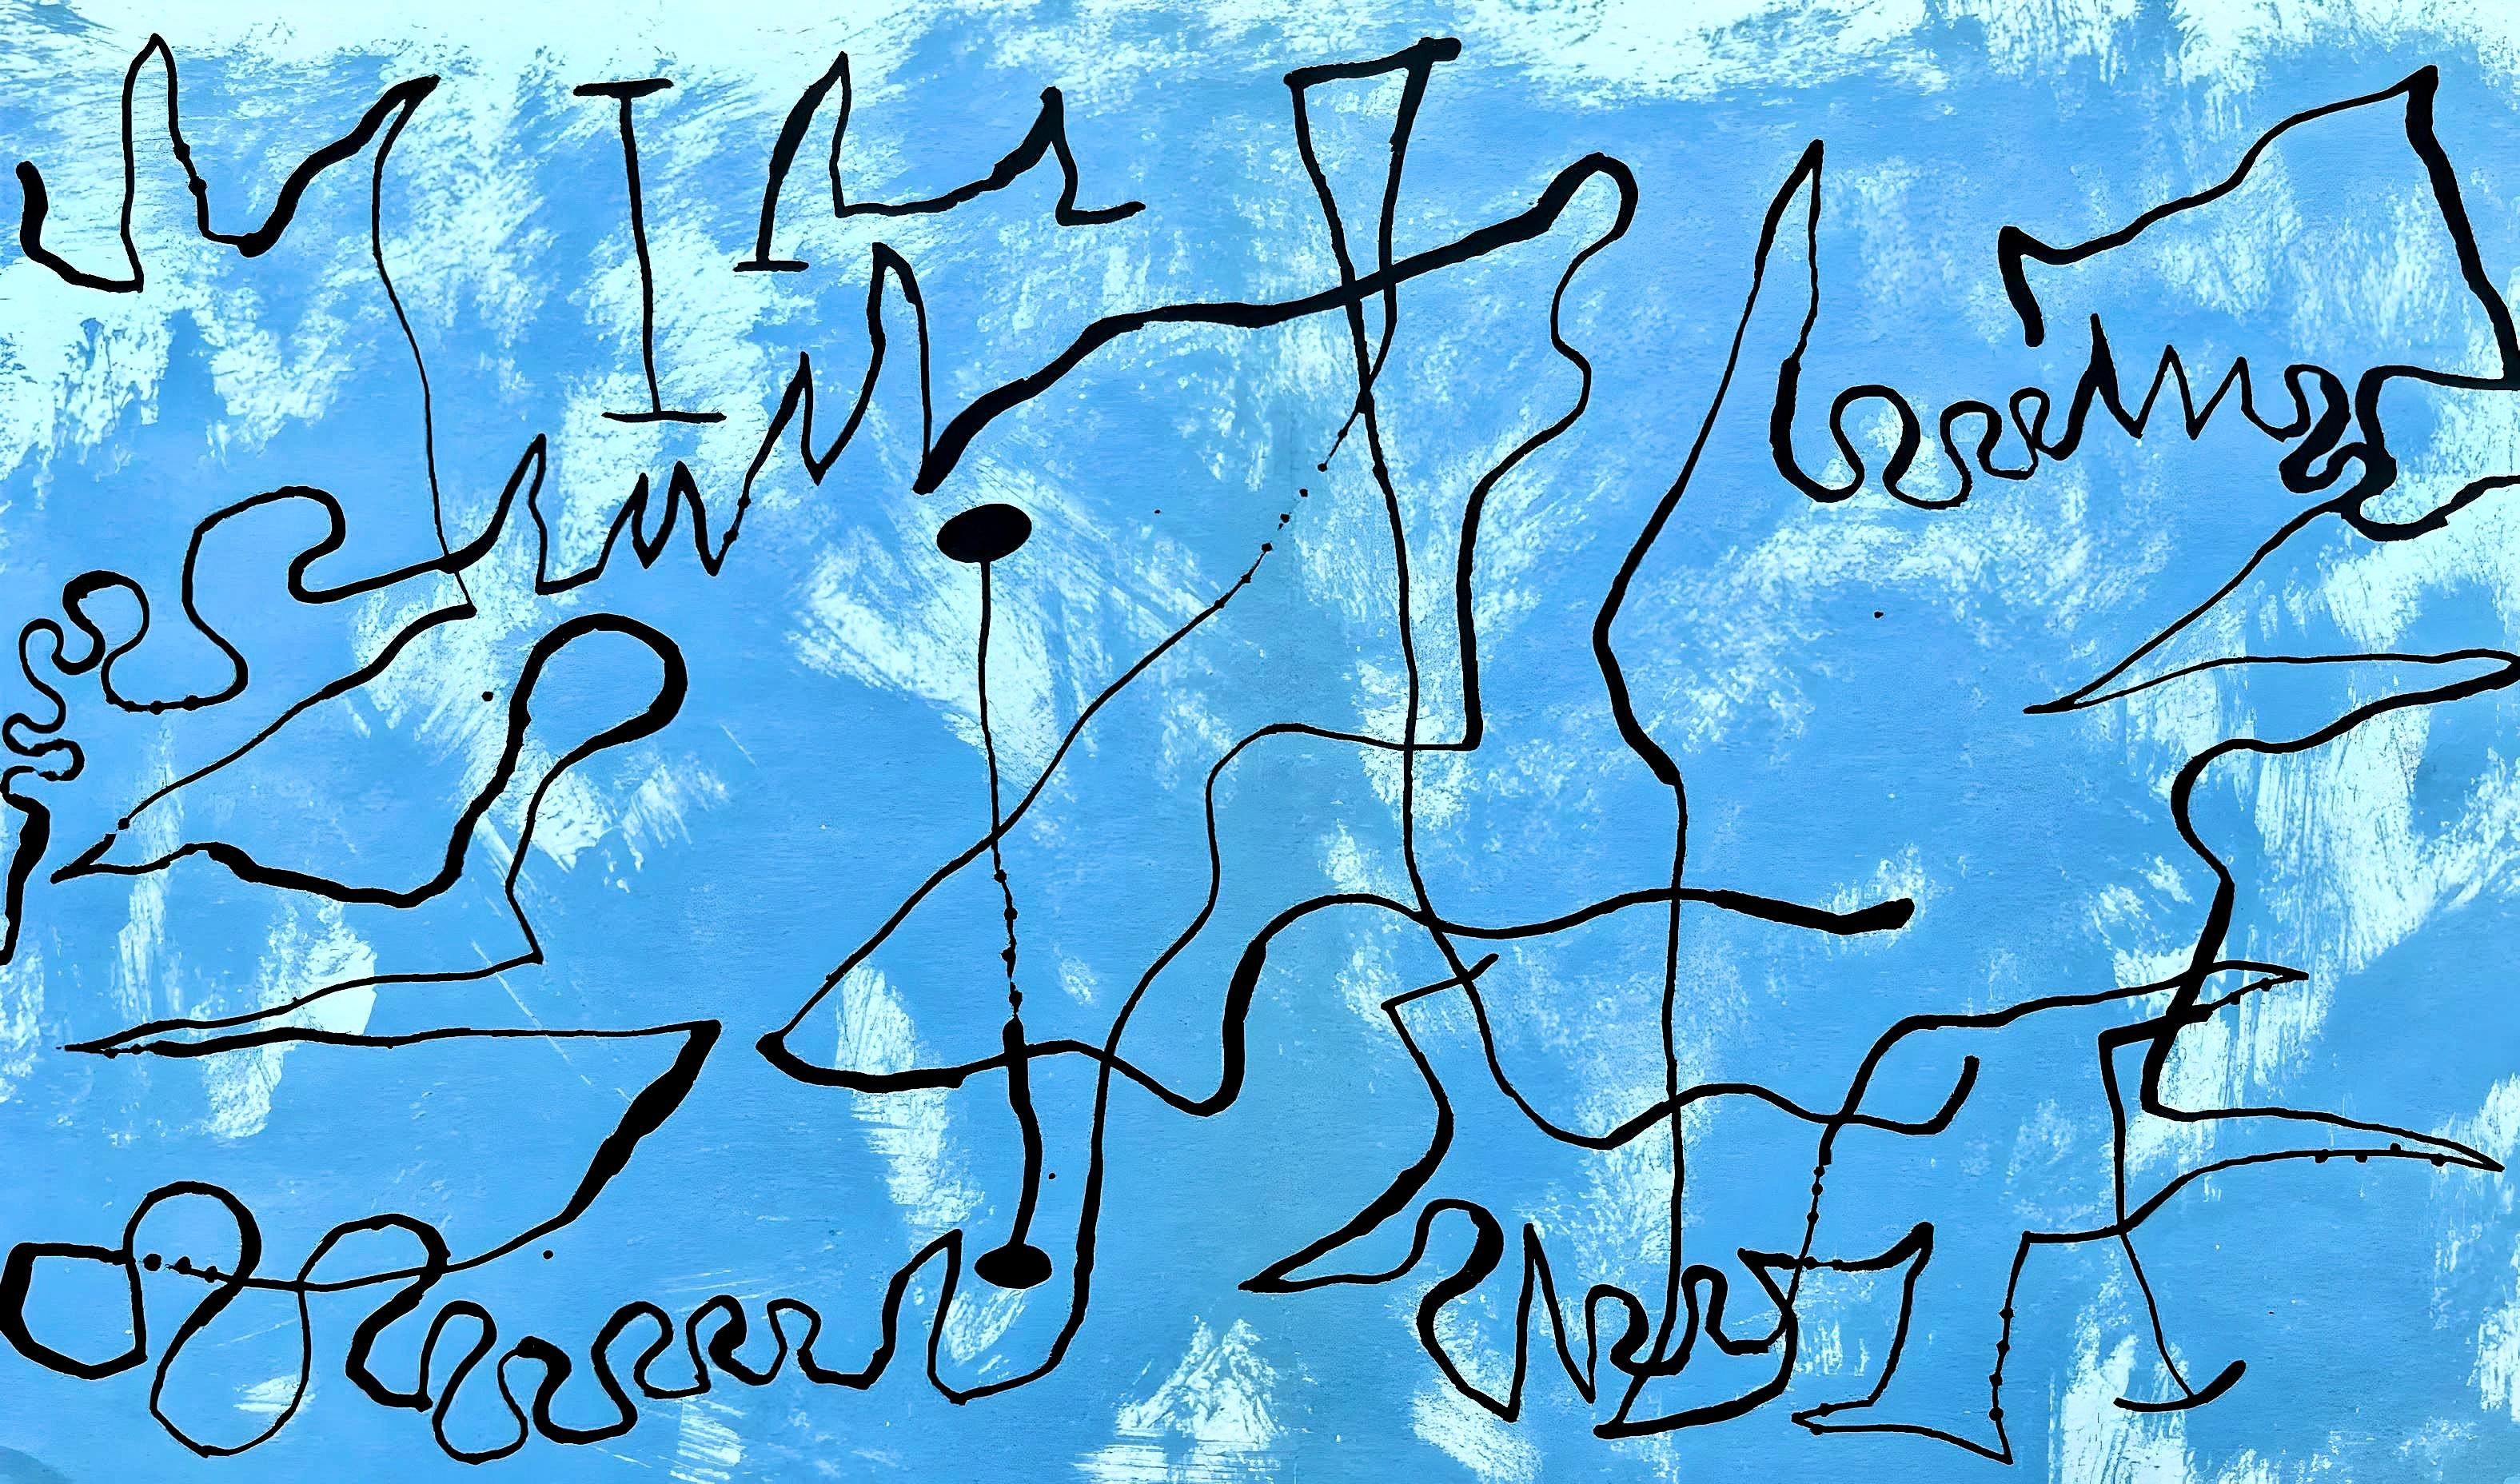 Abstract Print Joan Miró - Miro, Composition (Mourlot 234 ; Cramer 39), après